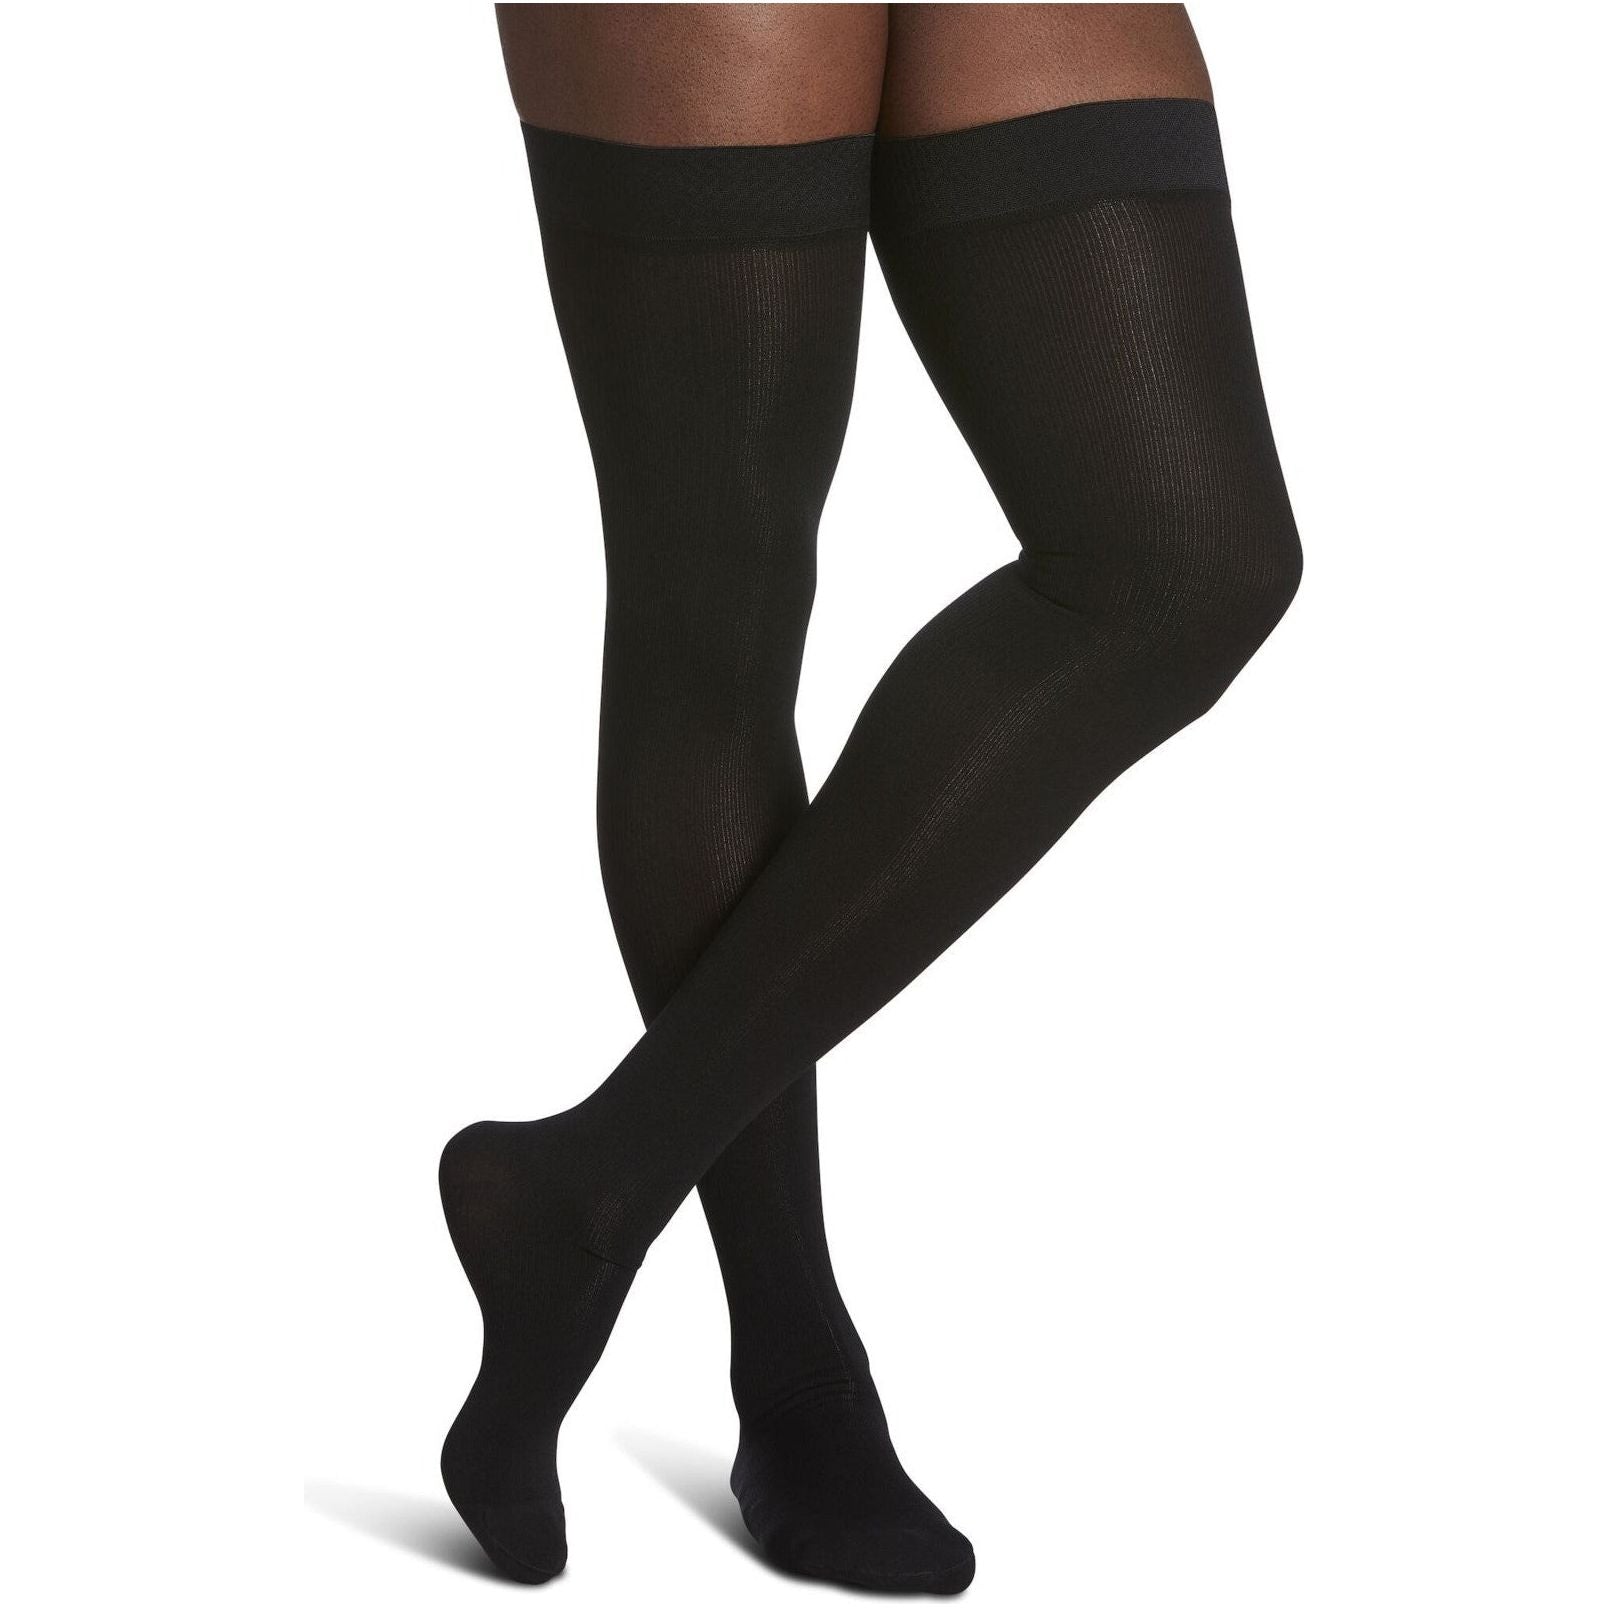 Extra Large Compression Stockings for Men 20-30mmHg for DVT - Black, 5XL